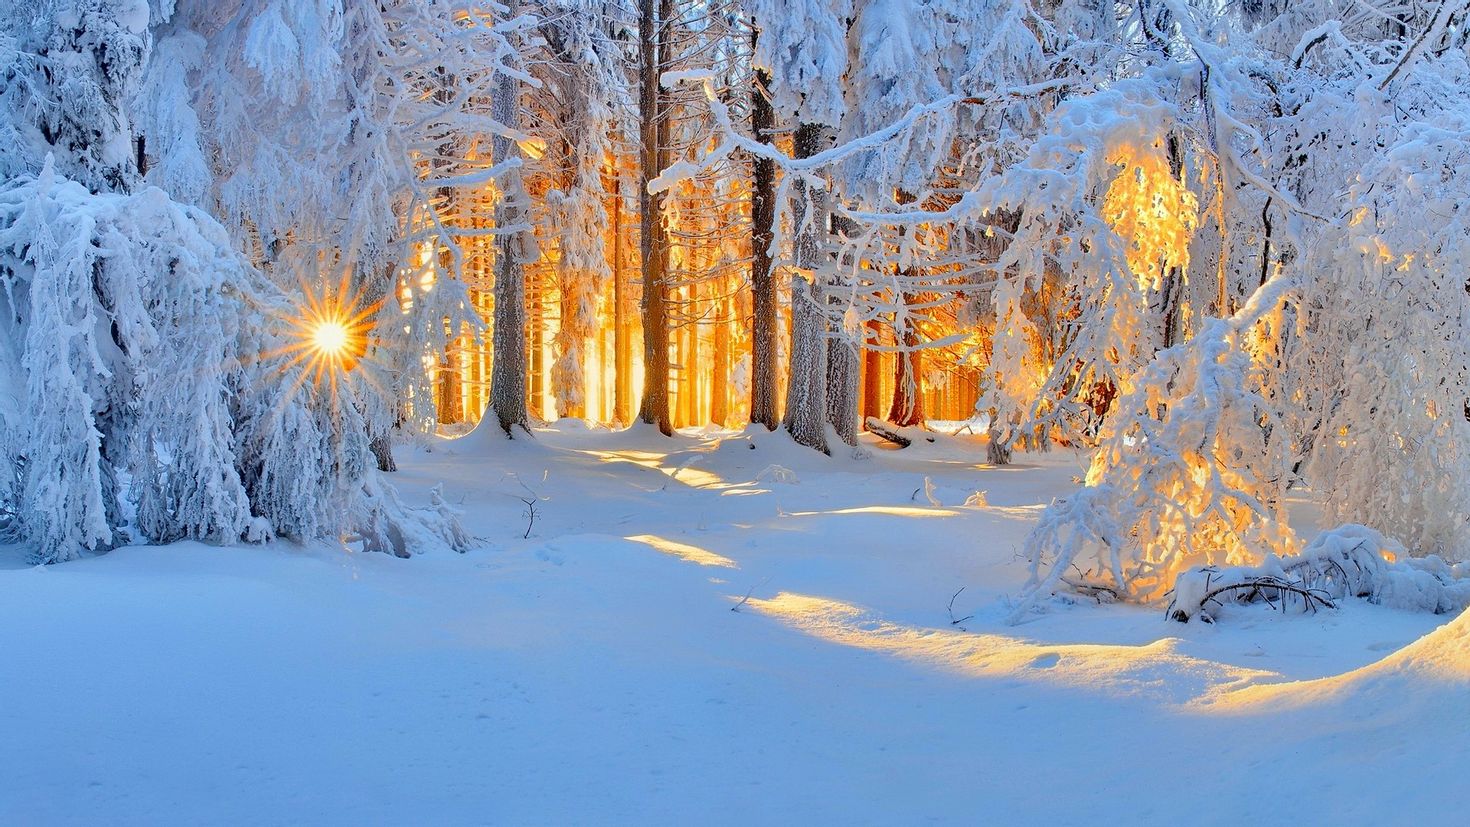 Фф и в морозном лесу я навеки. Зима снег. Сказочная зима. Зимний лес. Зимняя природа.